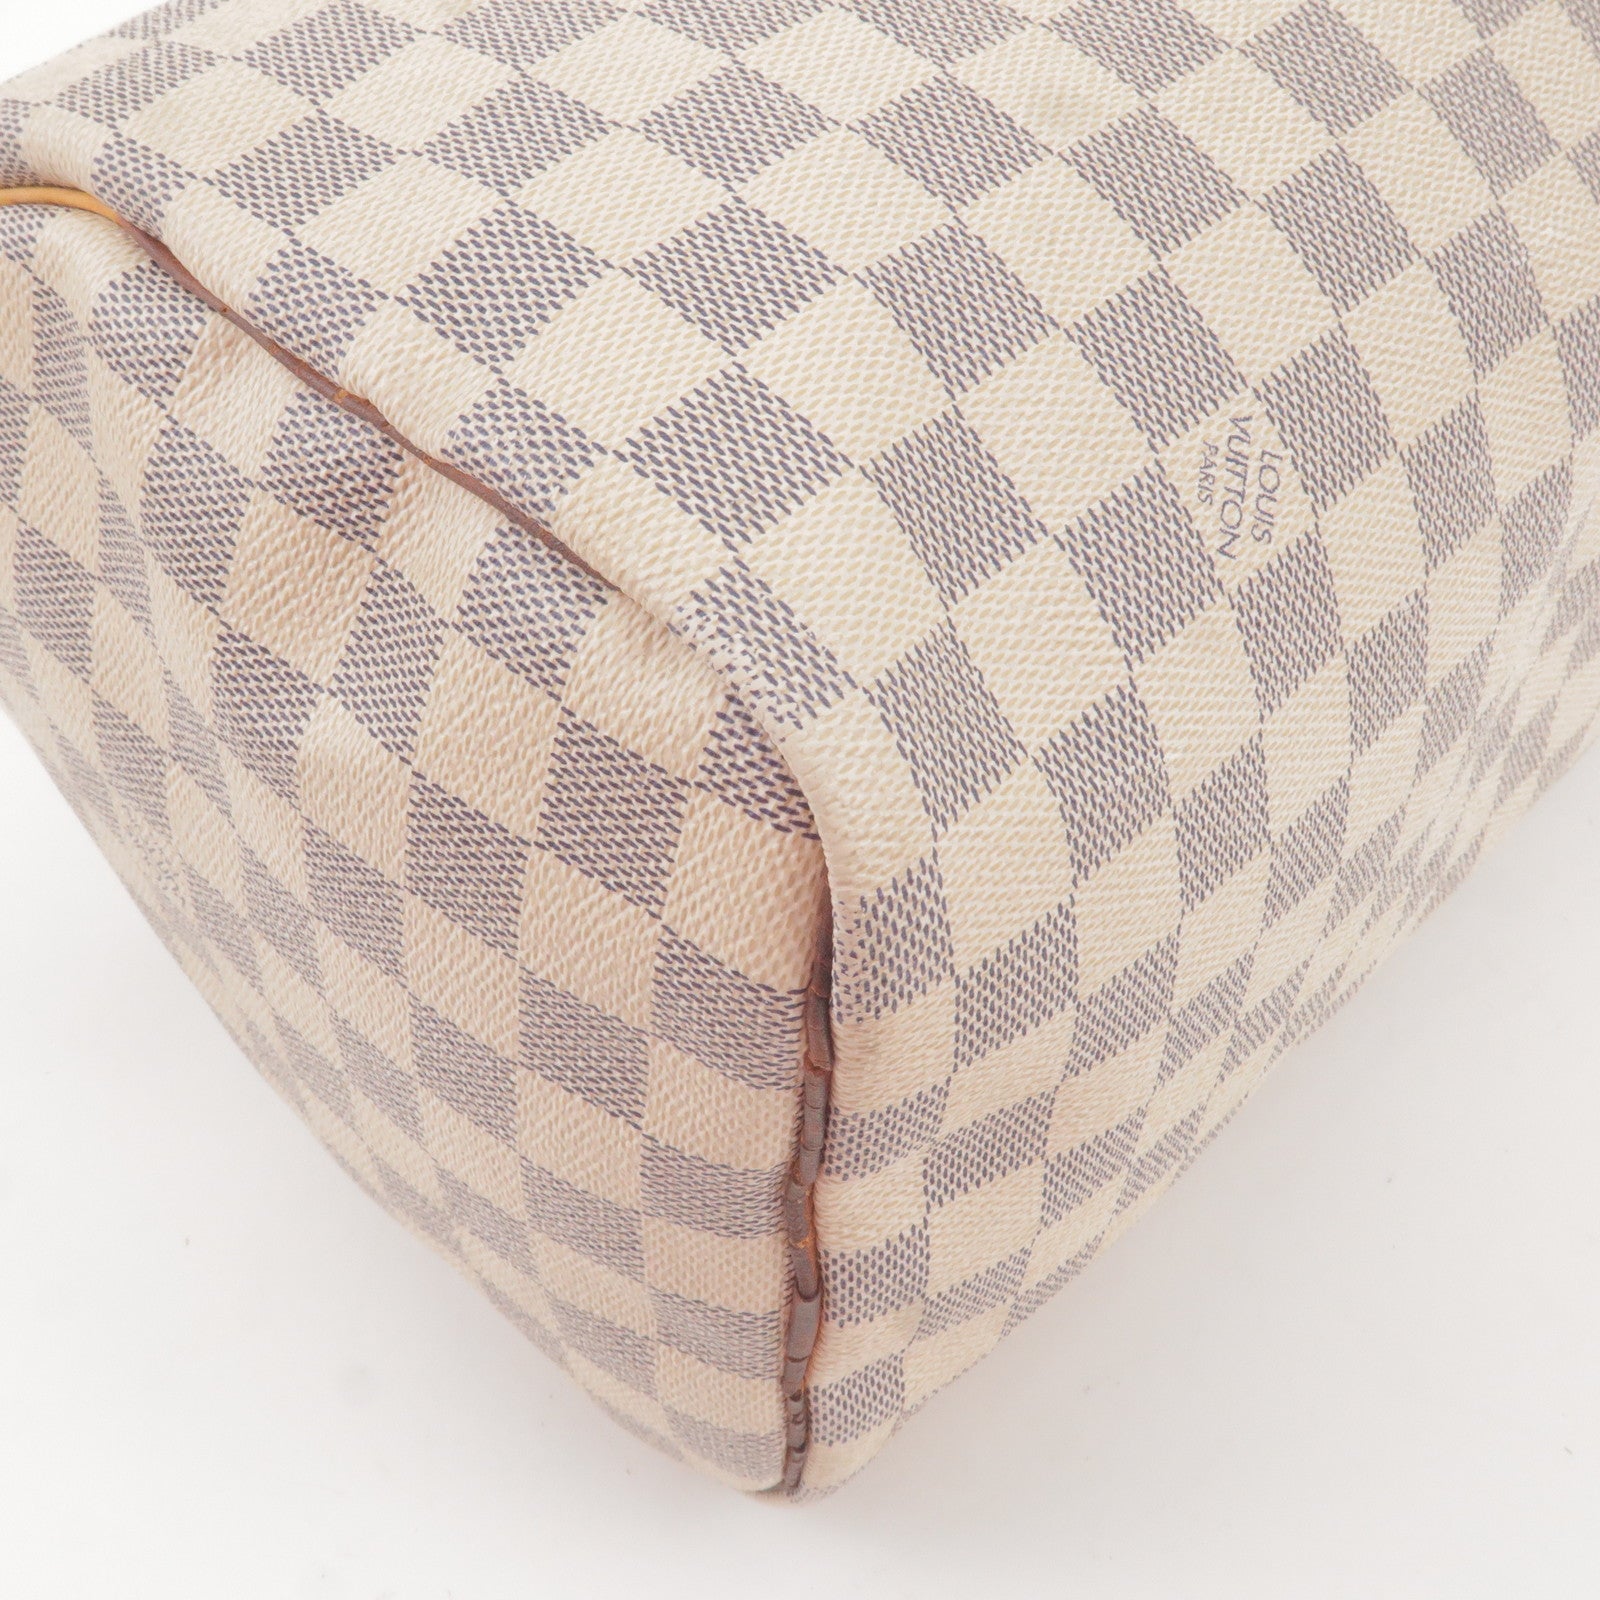 PRELOVED Louis Vuitton Damier Azur Monogram Speedy 30 Bag MB2151